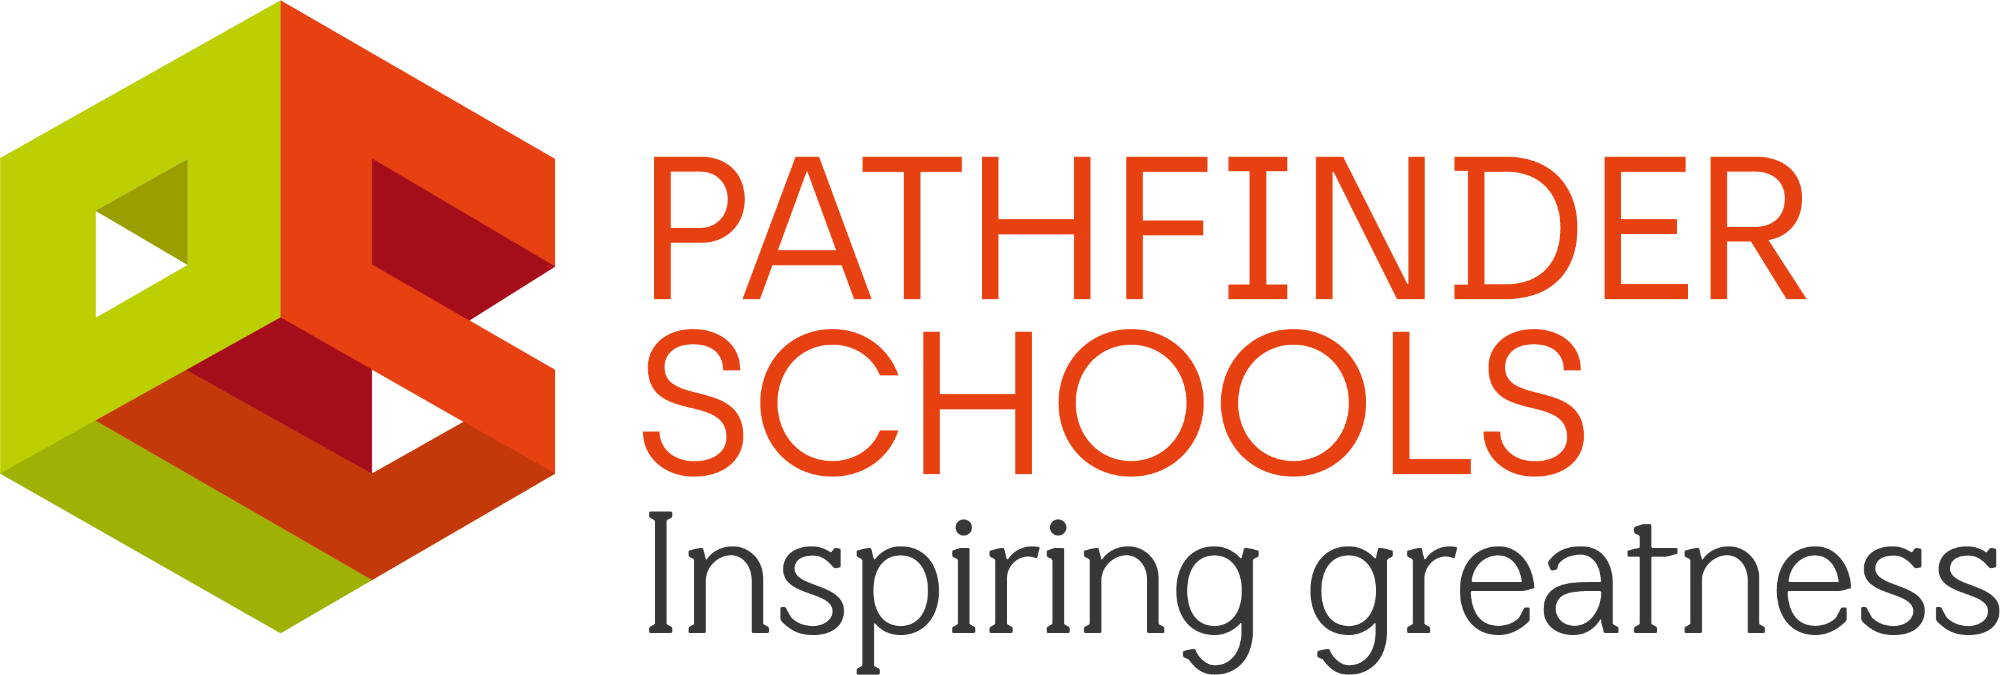 Pathfinder Schools